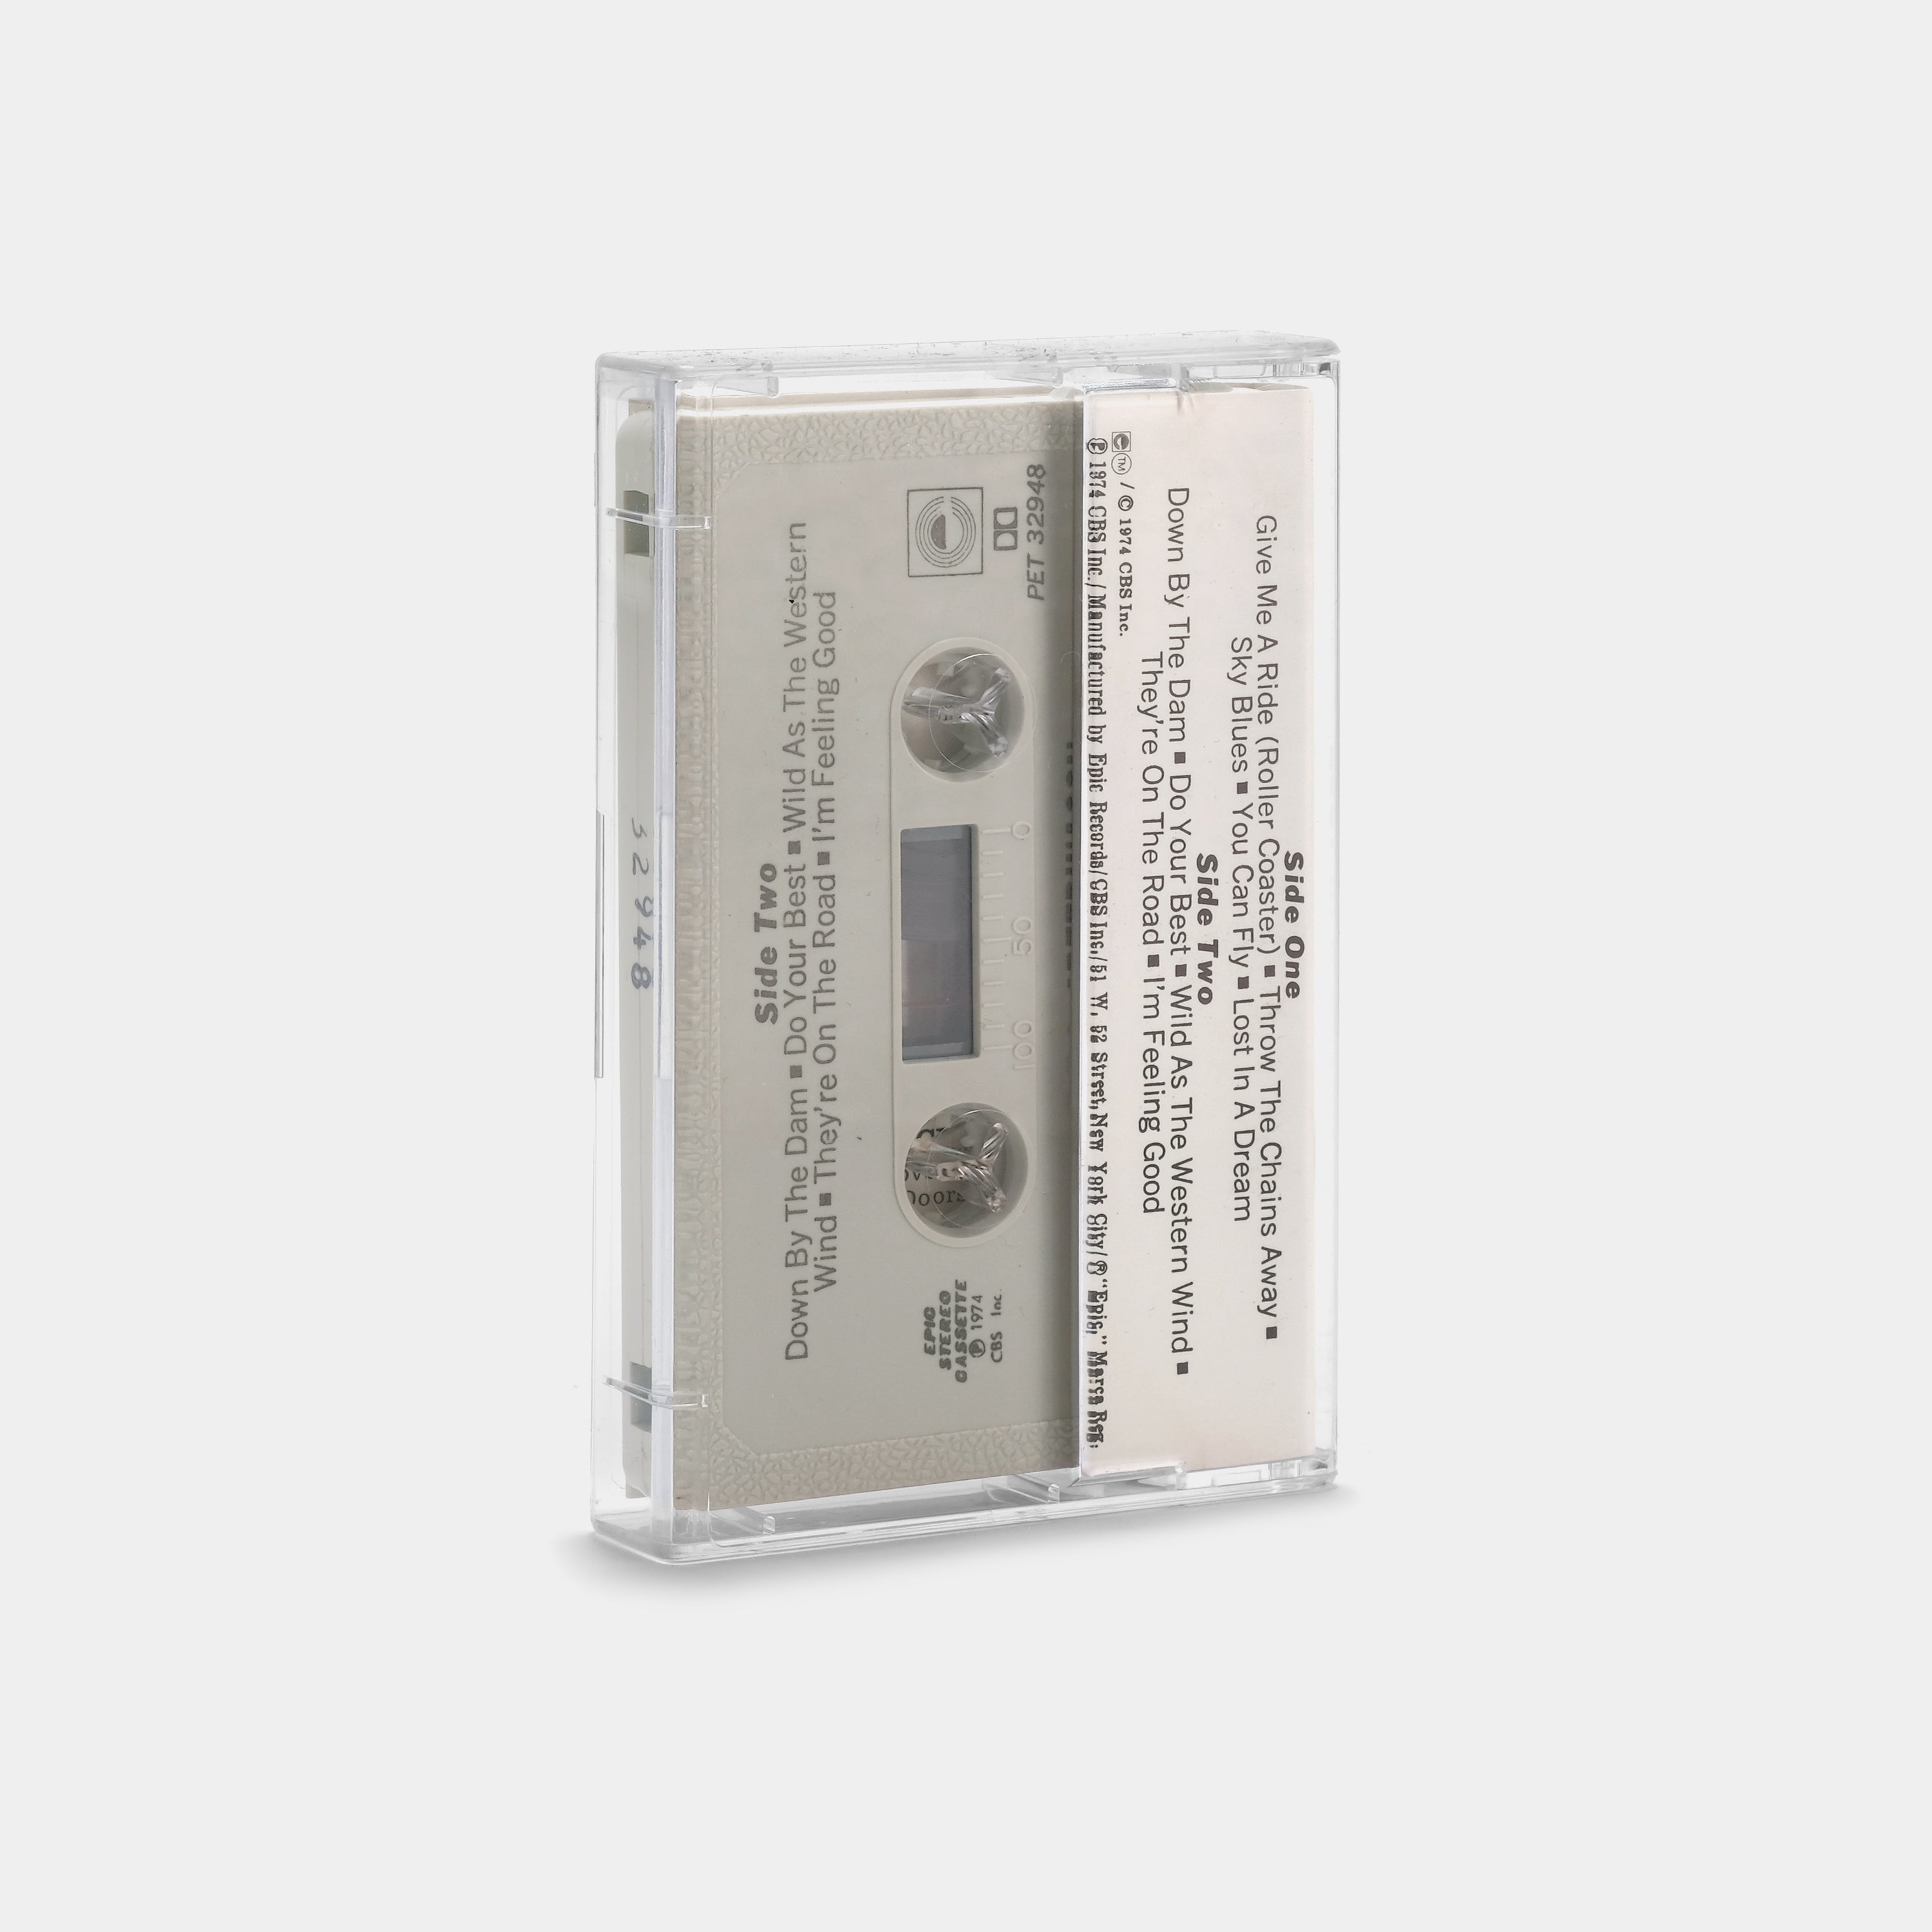 REO Speedwagon  - Lost in a Dream Cassette Tape